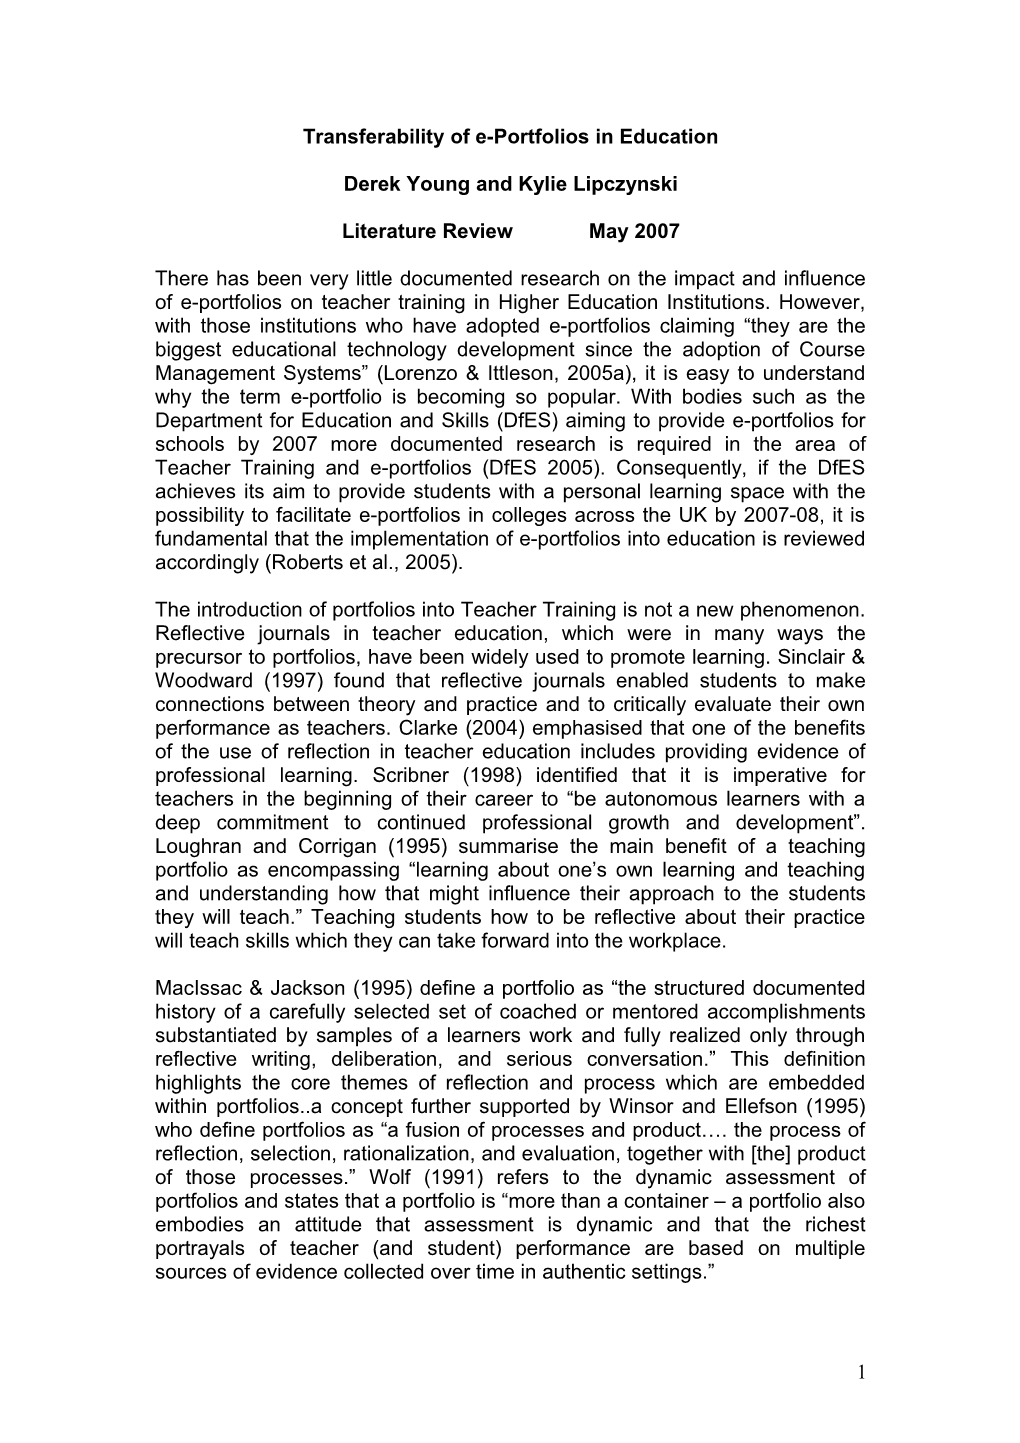 Transferability of E-Portfolios in Education - Literature Review - May 2007